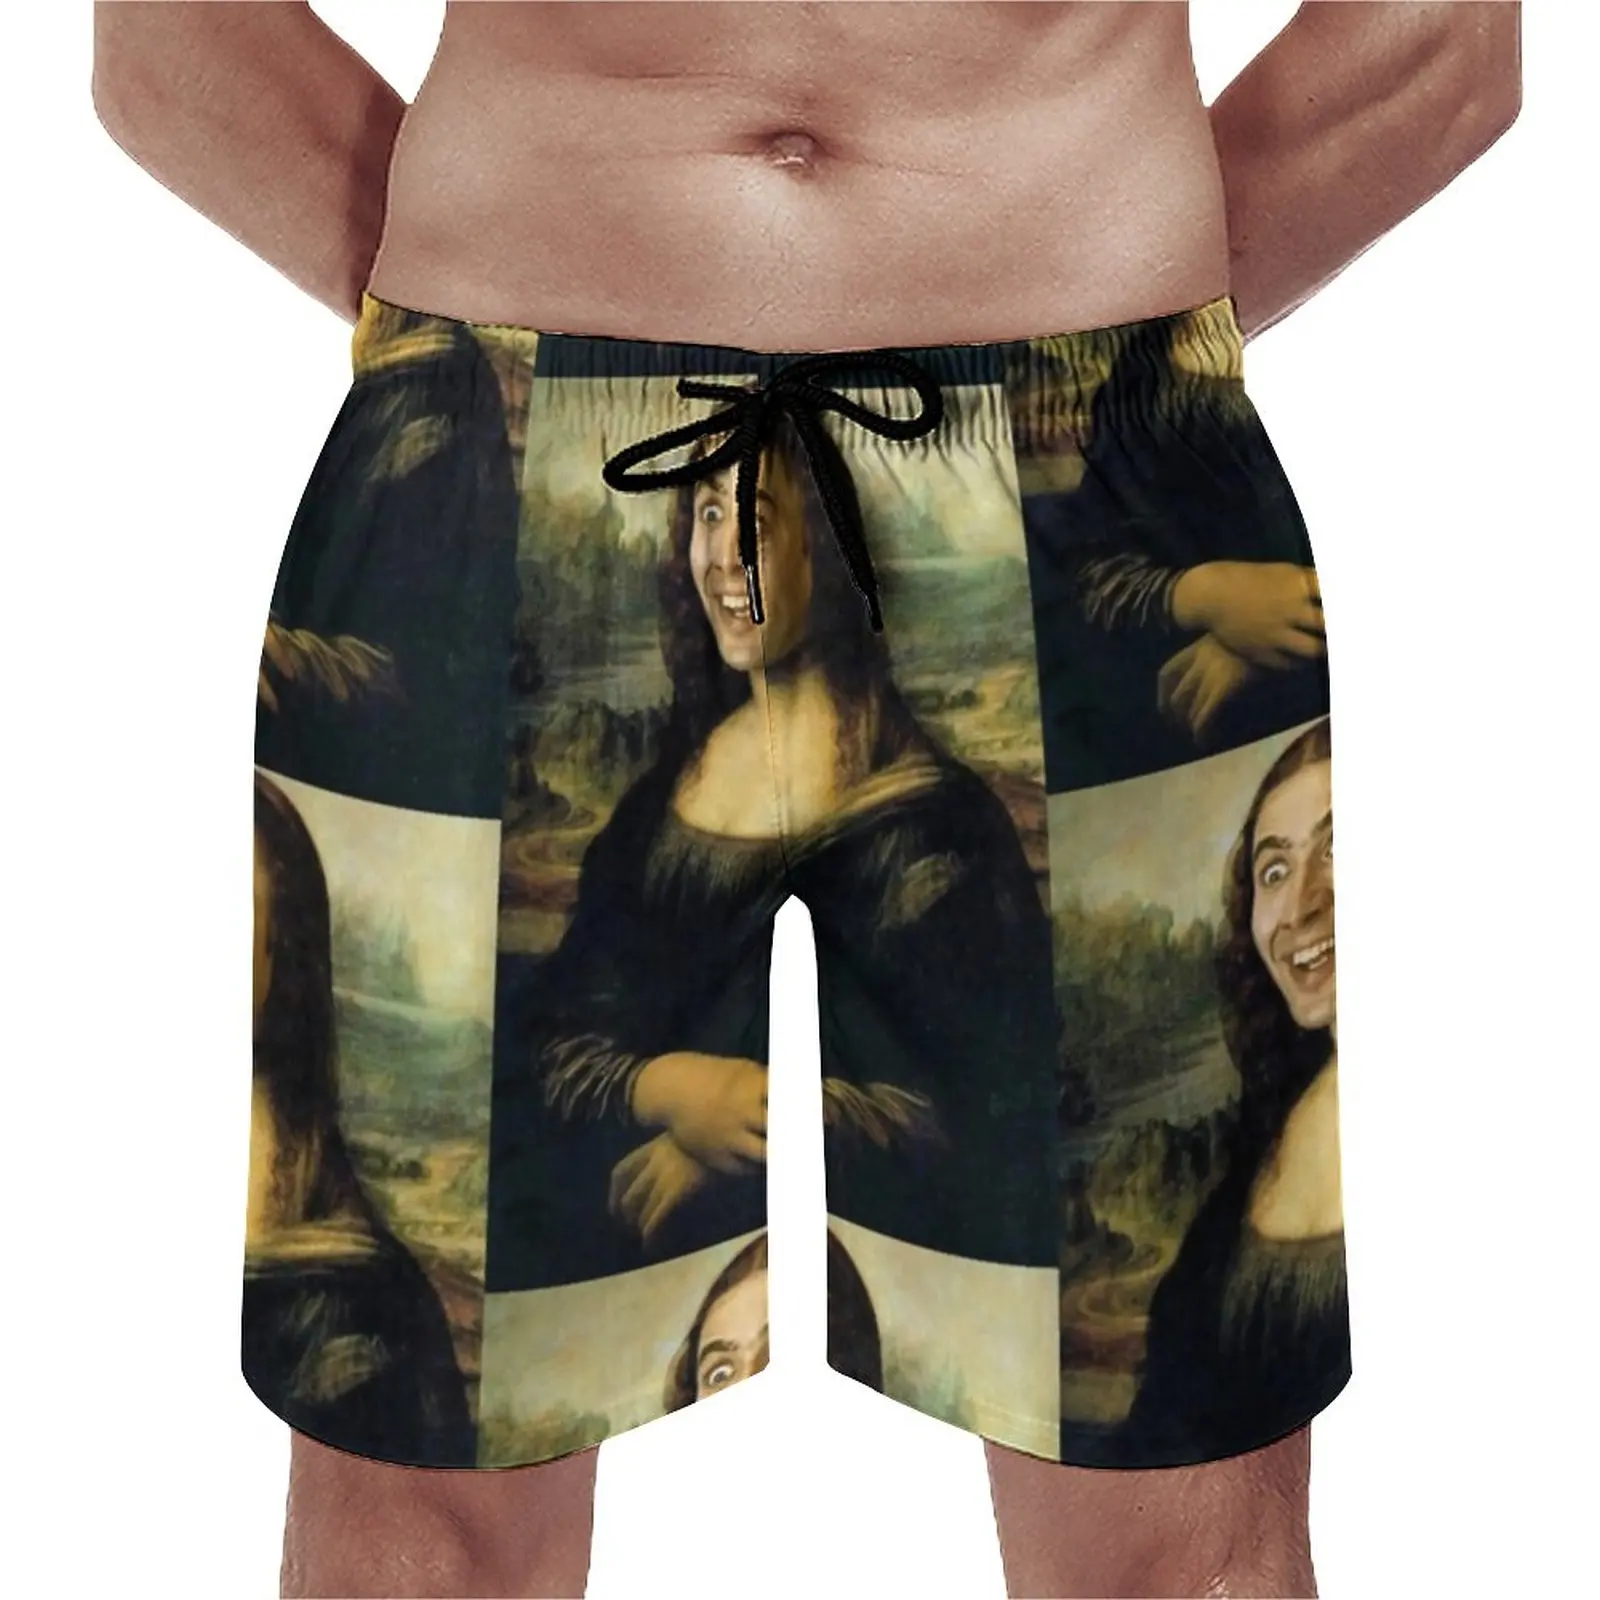 

Nicolas Cage Meme Board Shorts Funny Mona Lisa Retro Beach Short Pants Man Graphic Sports Comfortable Beach Trunks Gift Idea